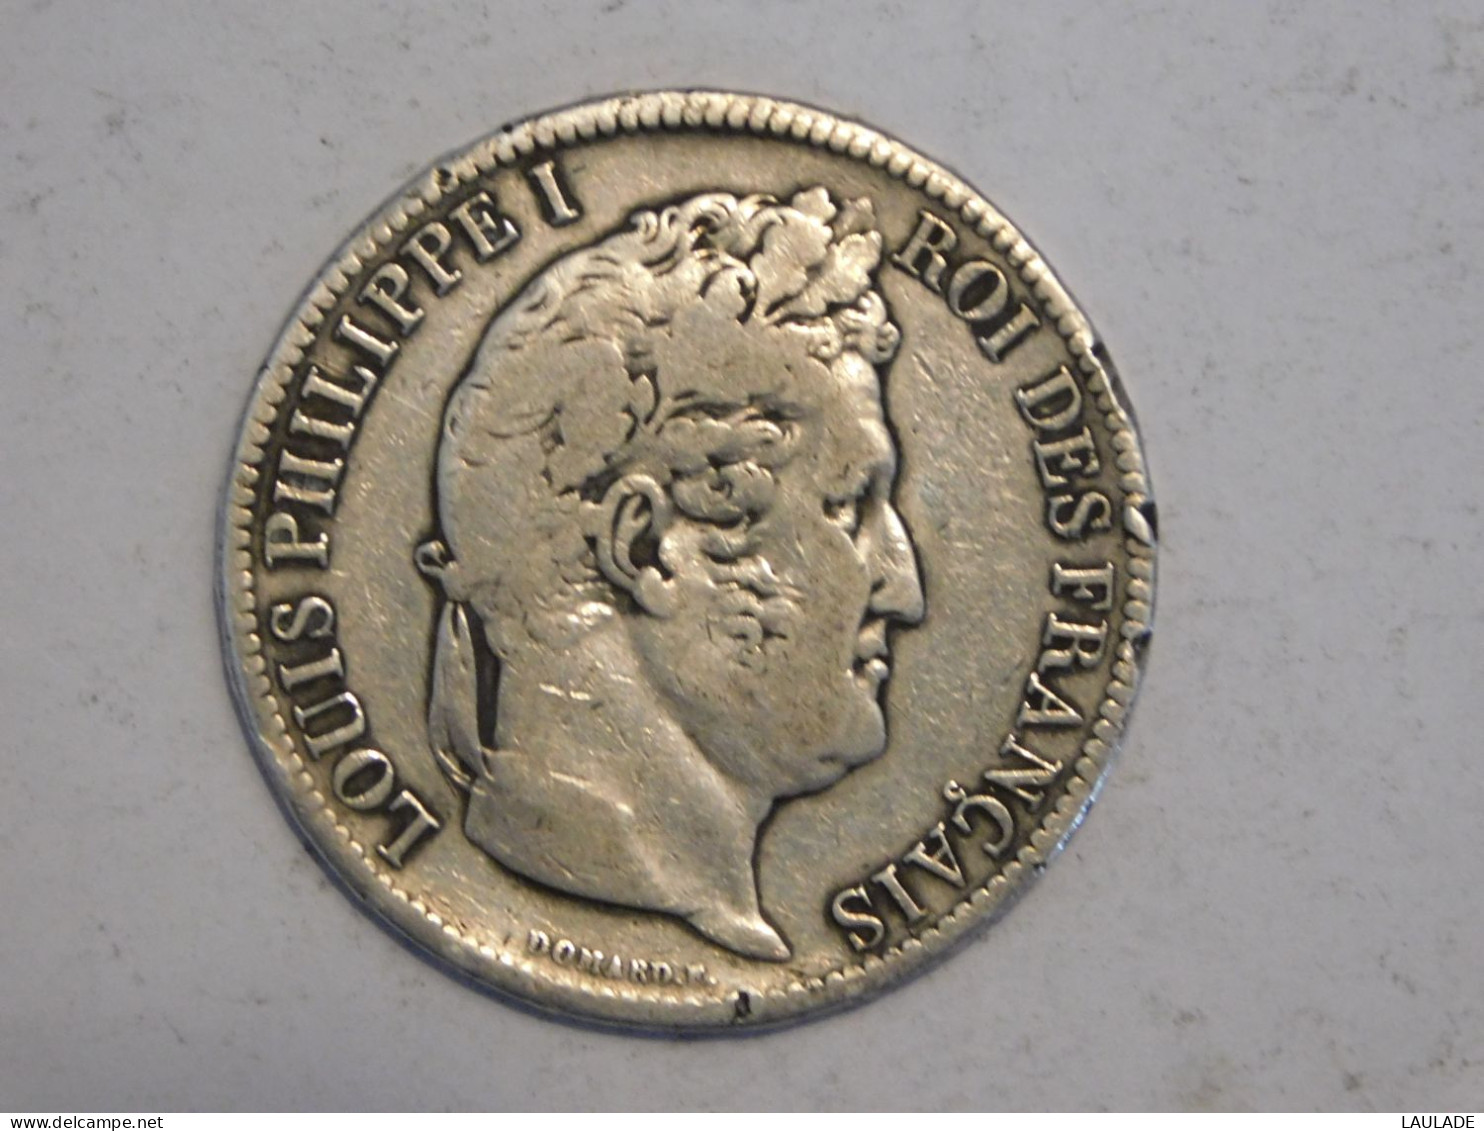 FRANCE 5 Francs 1831 D - Silver, Argent Franc - 5 Francs